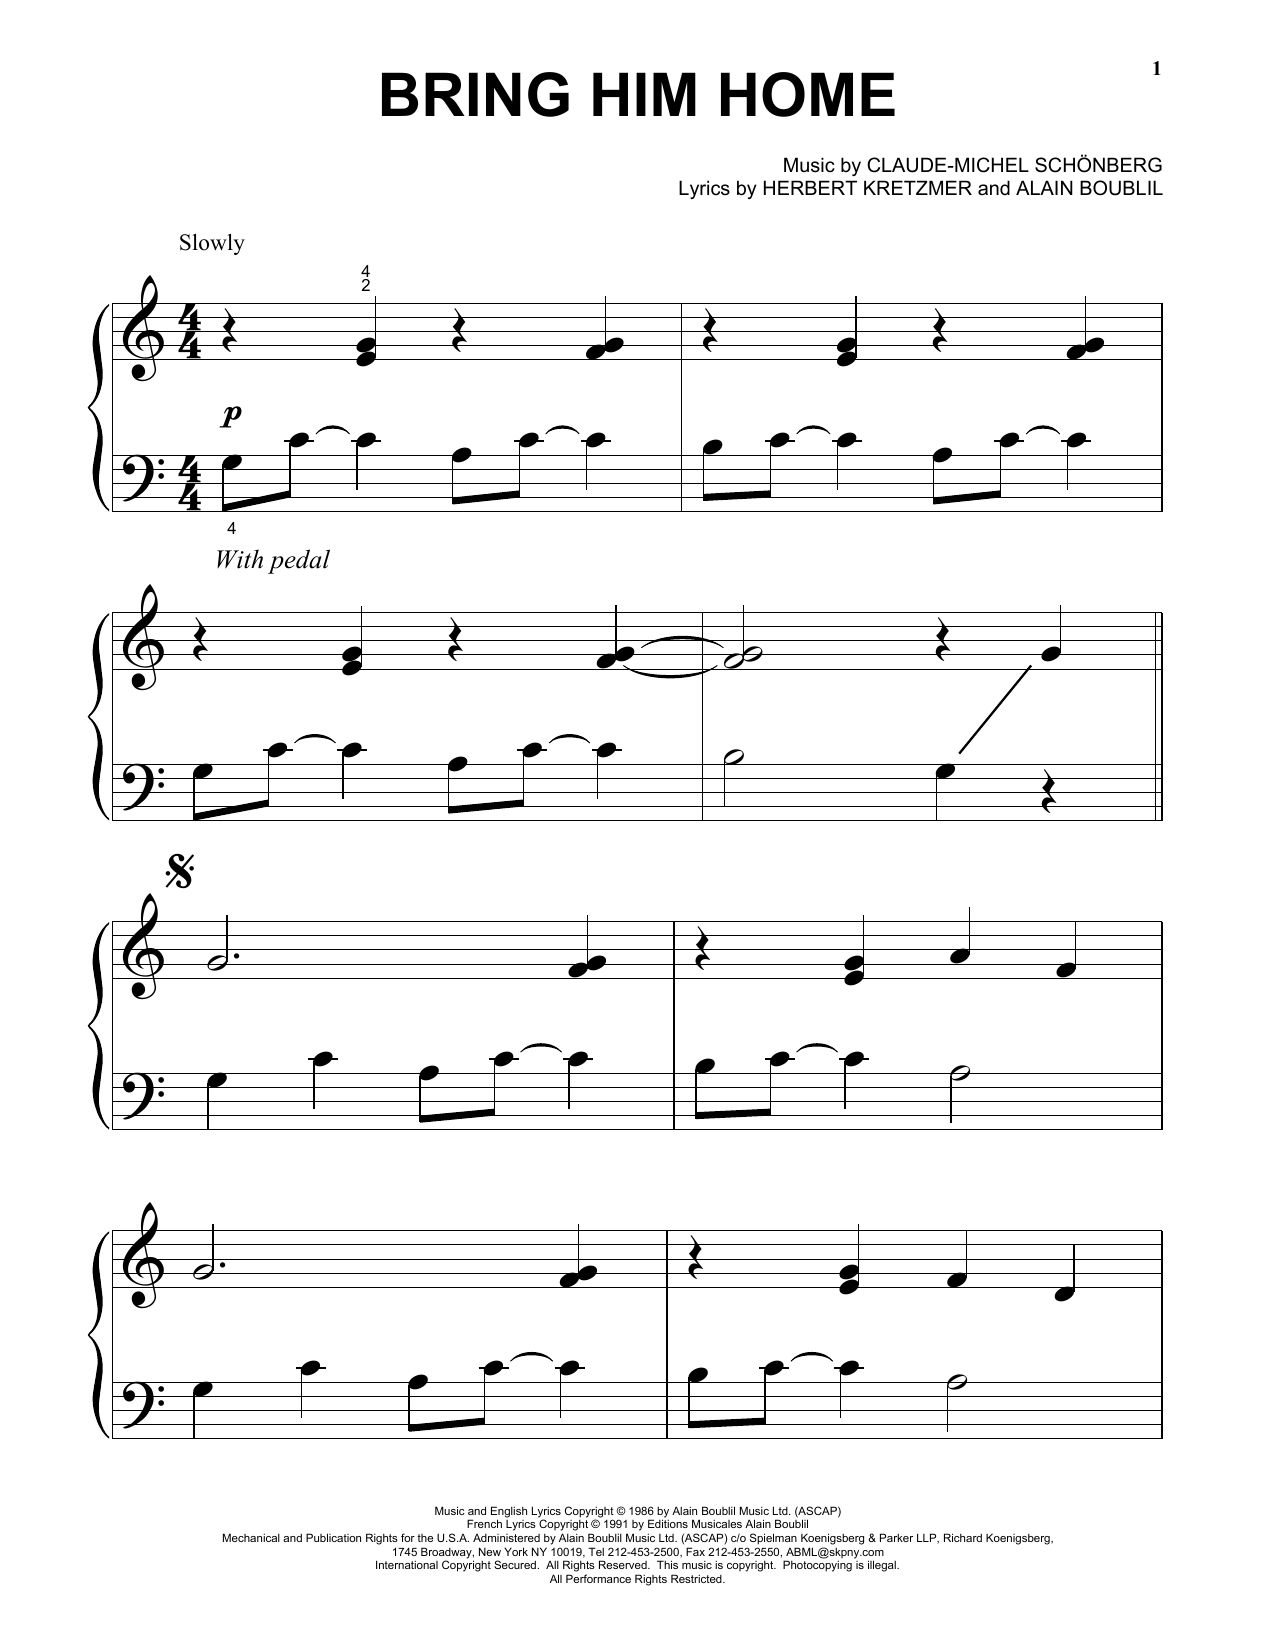 Claude-Michel Schönberg Bring Him Home Sheet Music Notes & Chords for Alto Saxophone Duet - Download or Print PDF